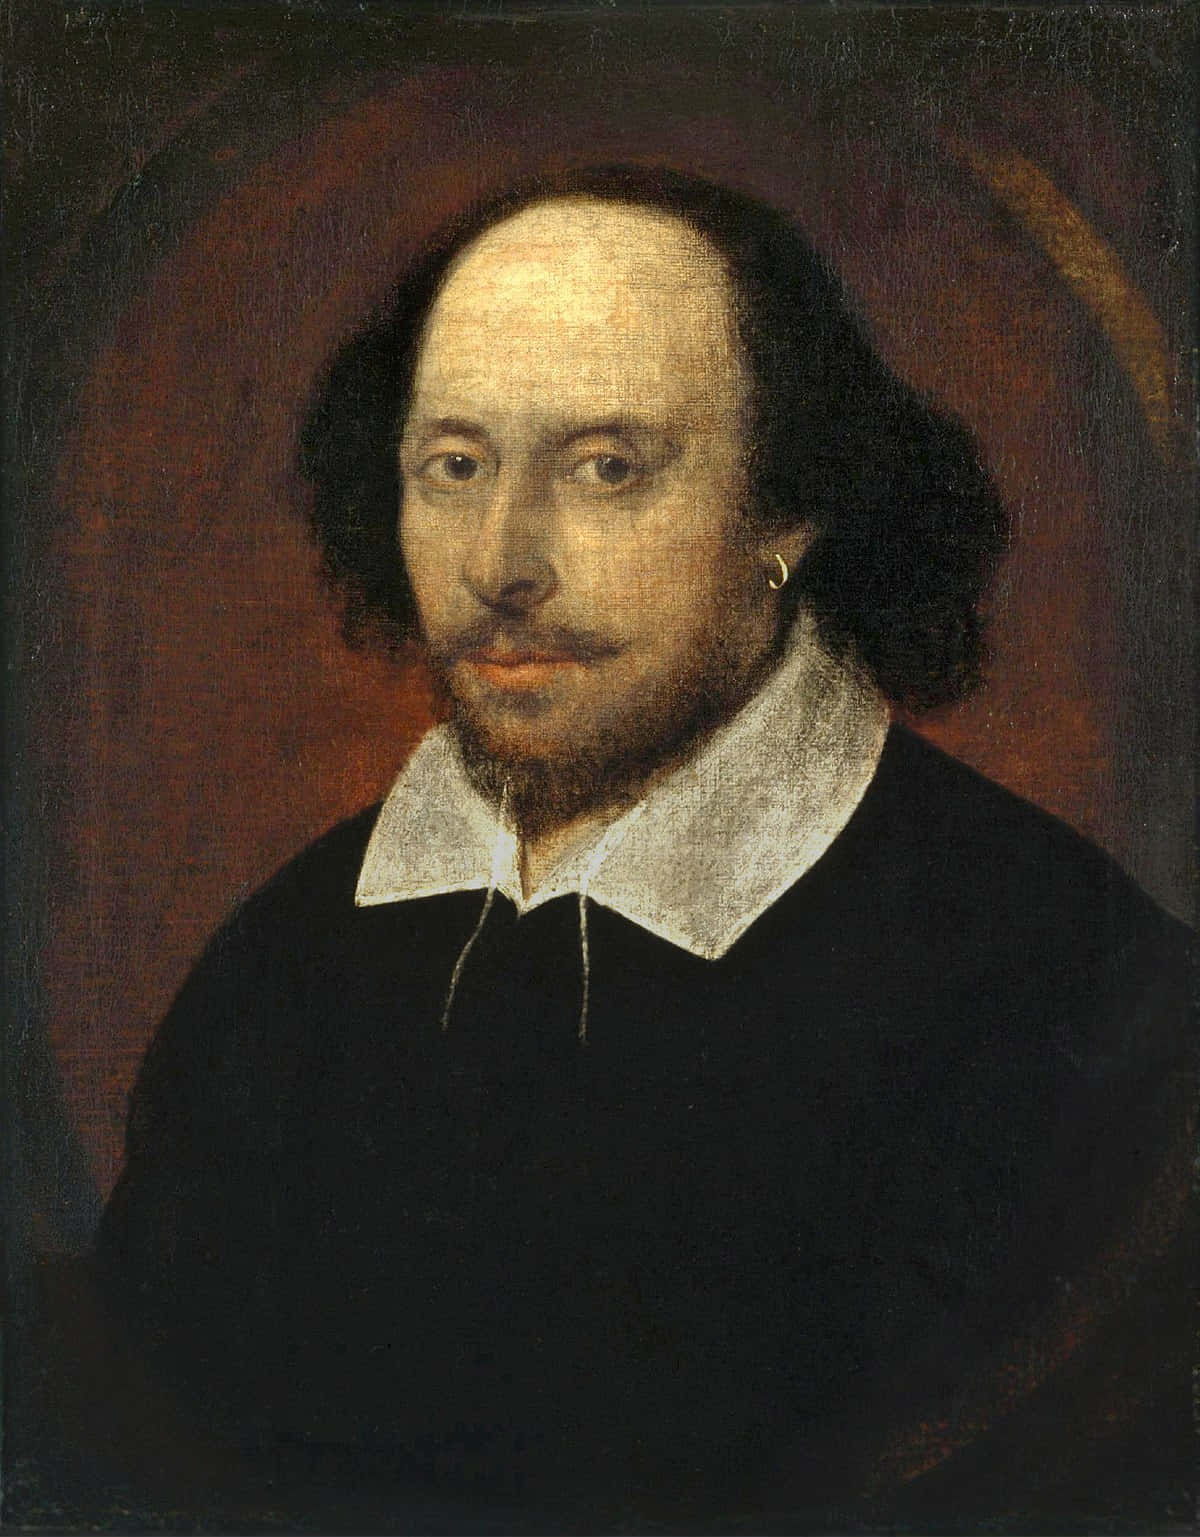 Porträttbildav William Shakespeare.